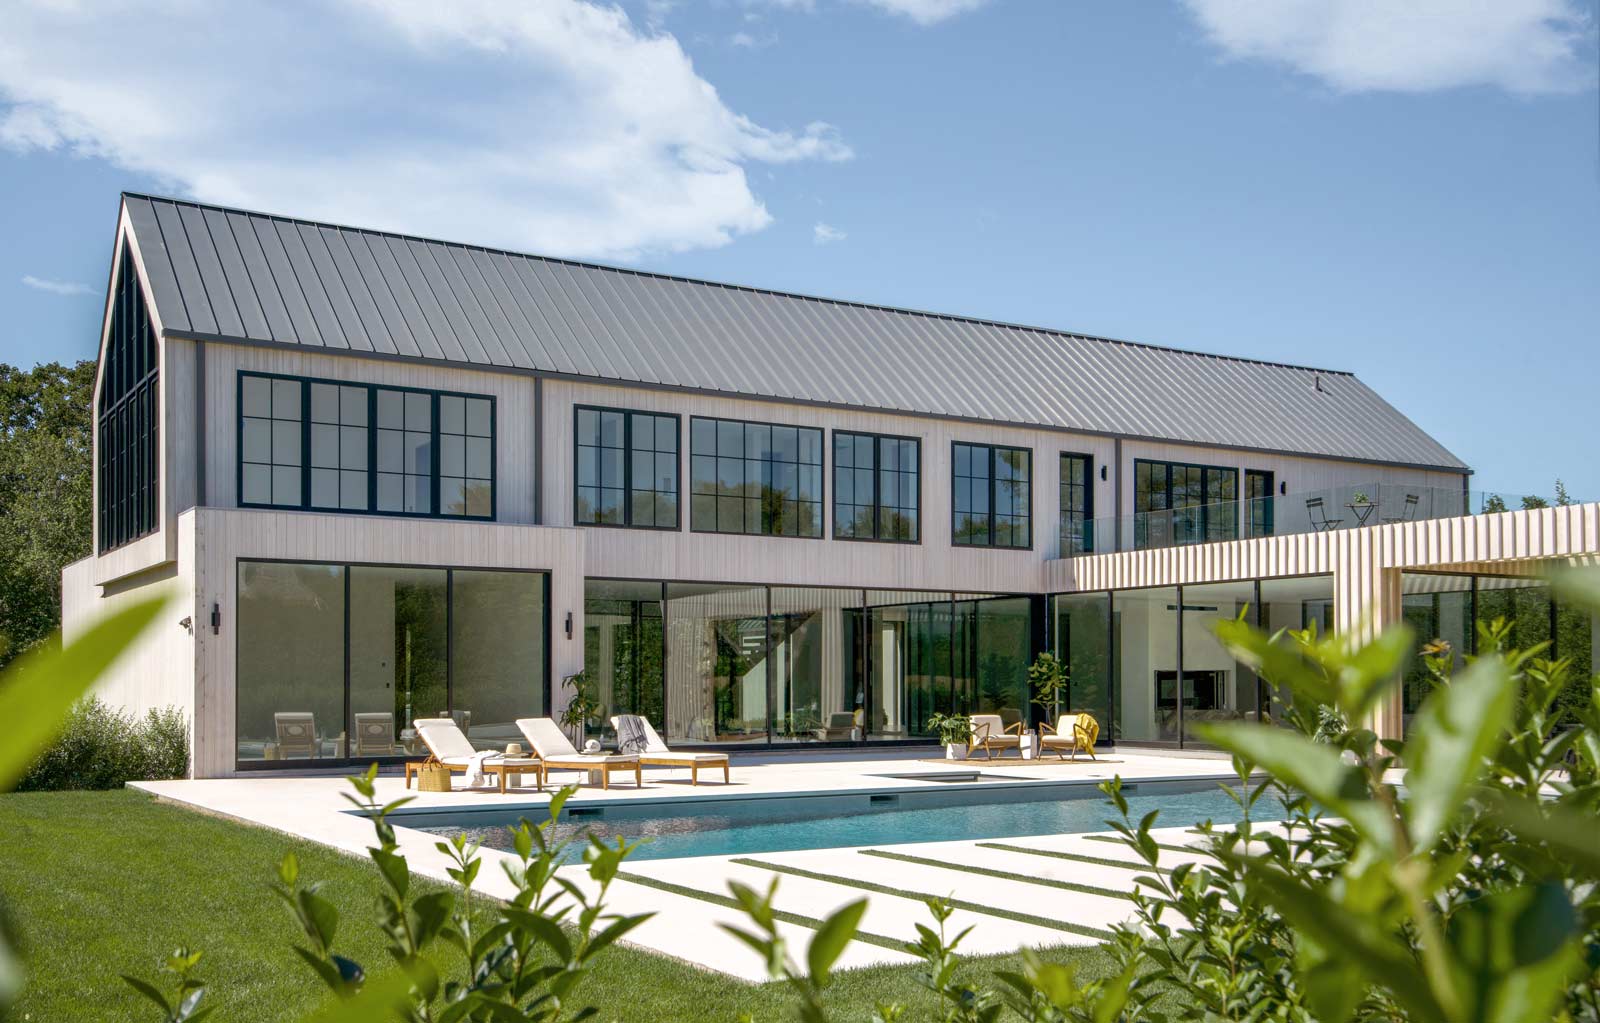 modern farmhouse architecture and modern pool landscape architecture